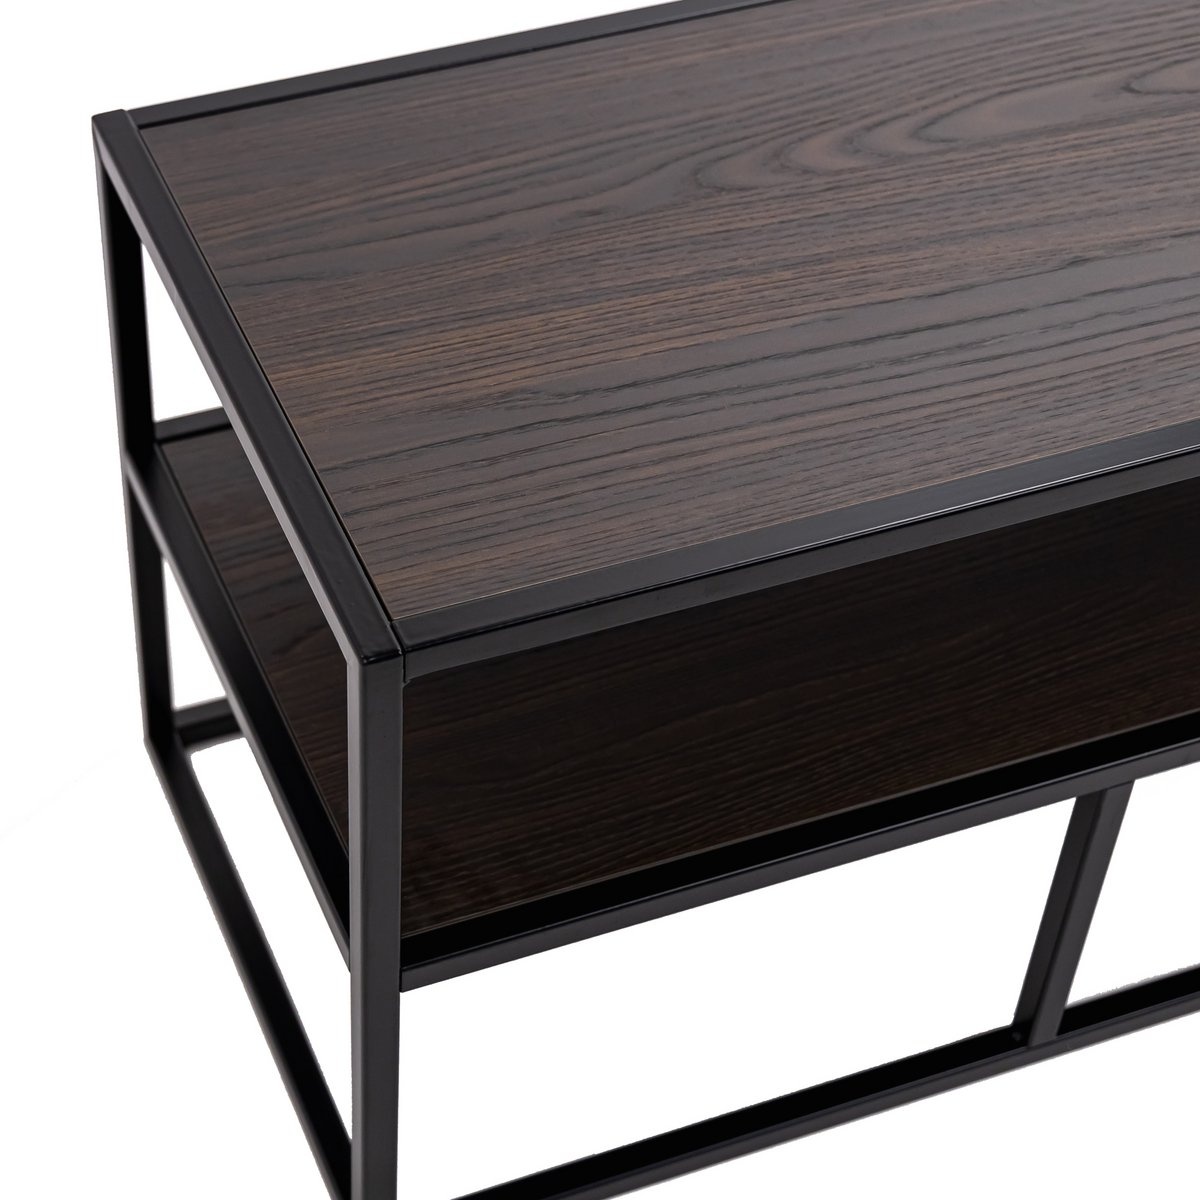 KantoormeubelenPlus Stalux Tv-meubel 'Luuk' 150cm, kleur zwart / bruin hout